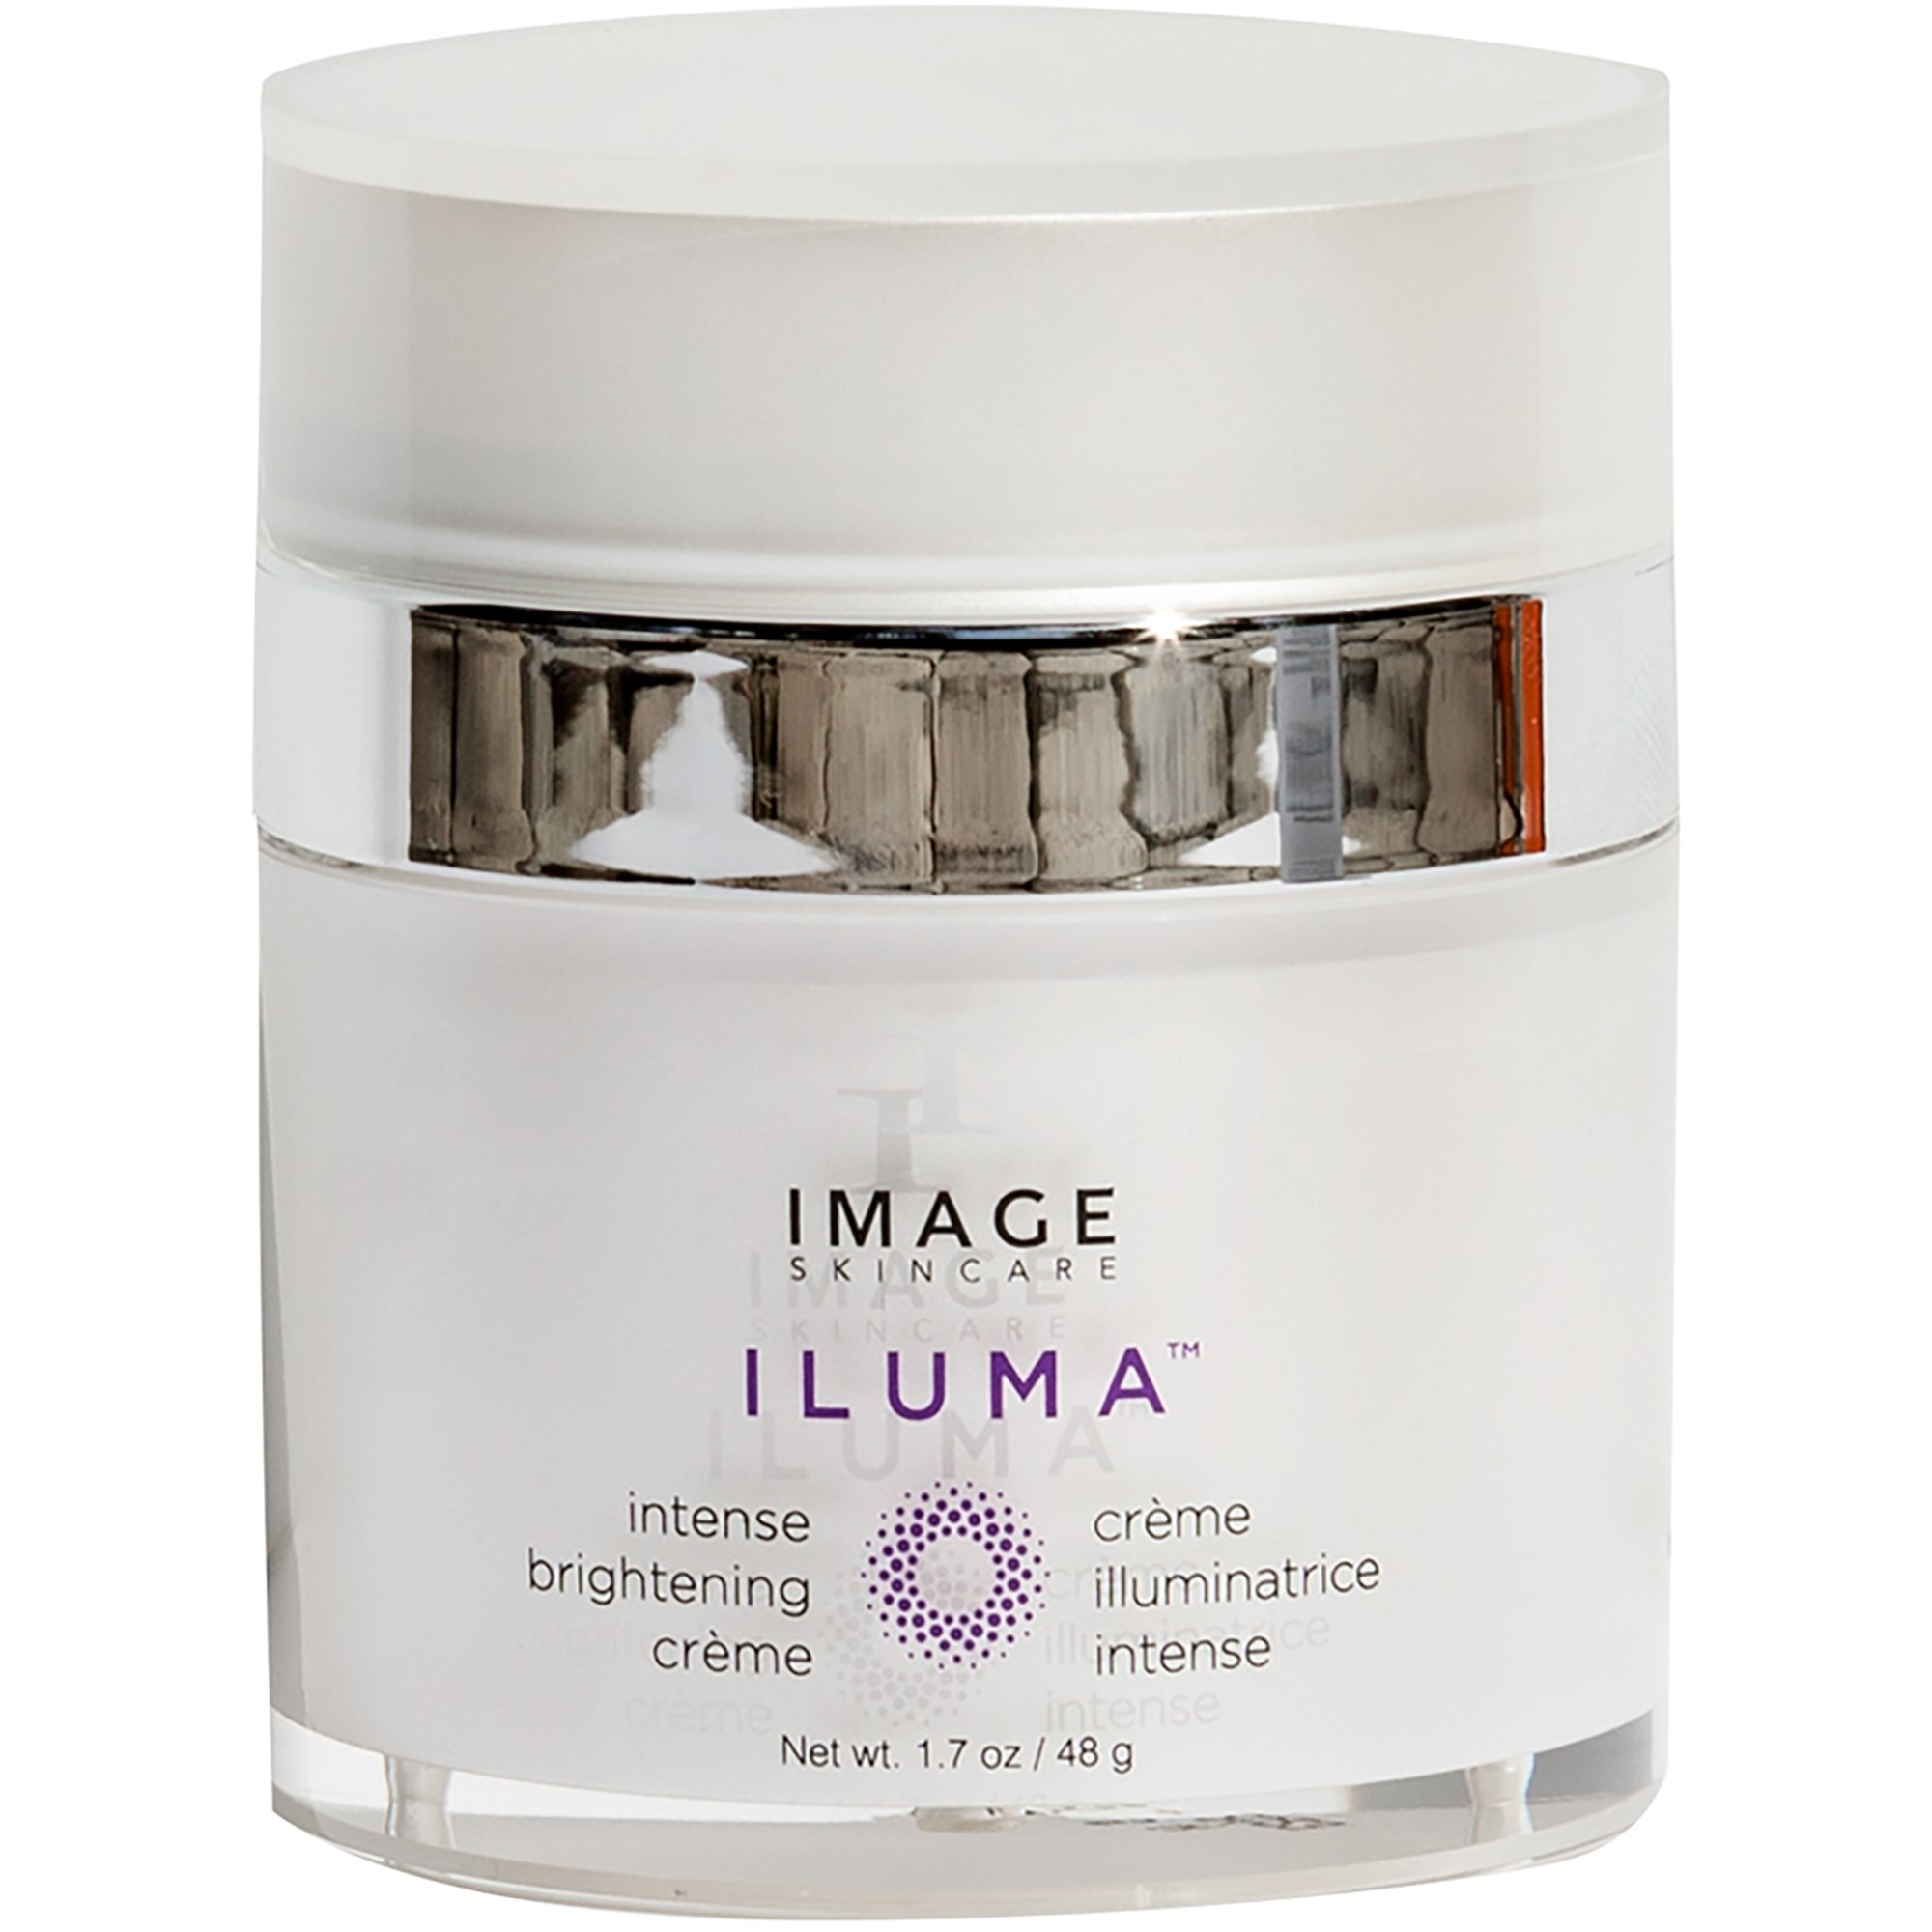 IMAGE Skincare Iluma® Intense Brightening Creme 50 ml